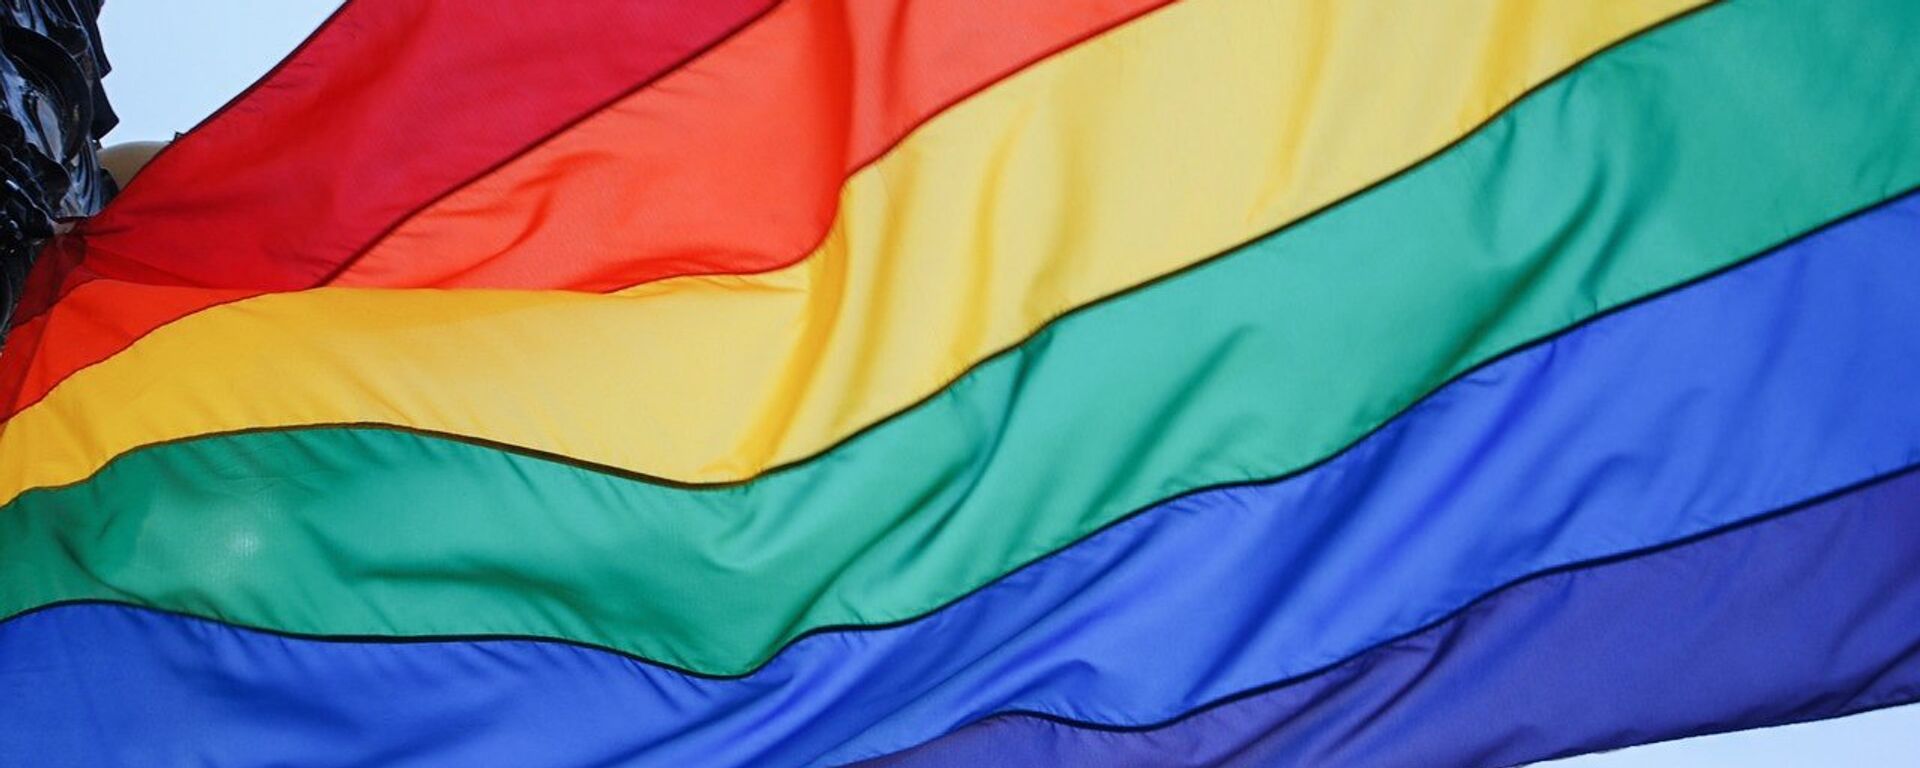 Bandera arcoíris, símbolo del movimiento LGBT - Sputnik Mundo, 1920, 18.05.2021